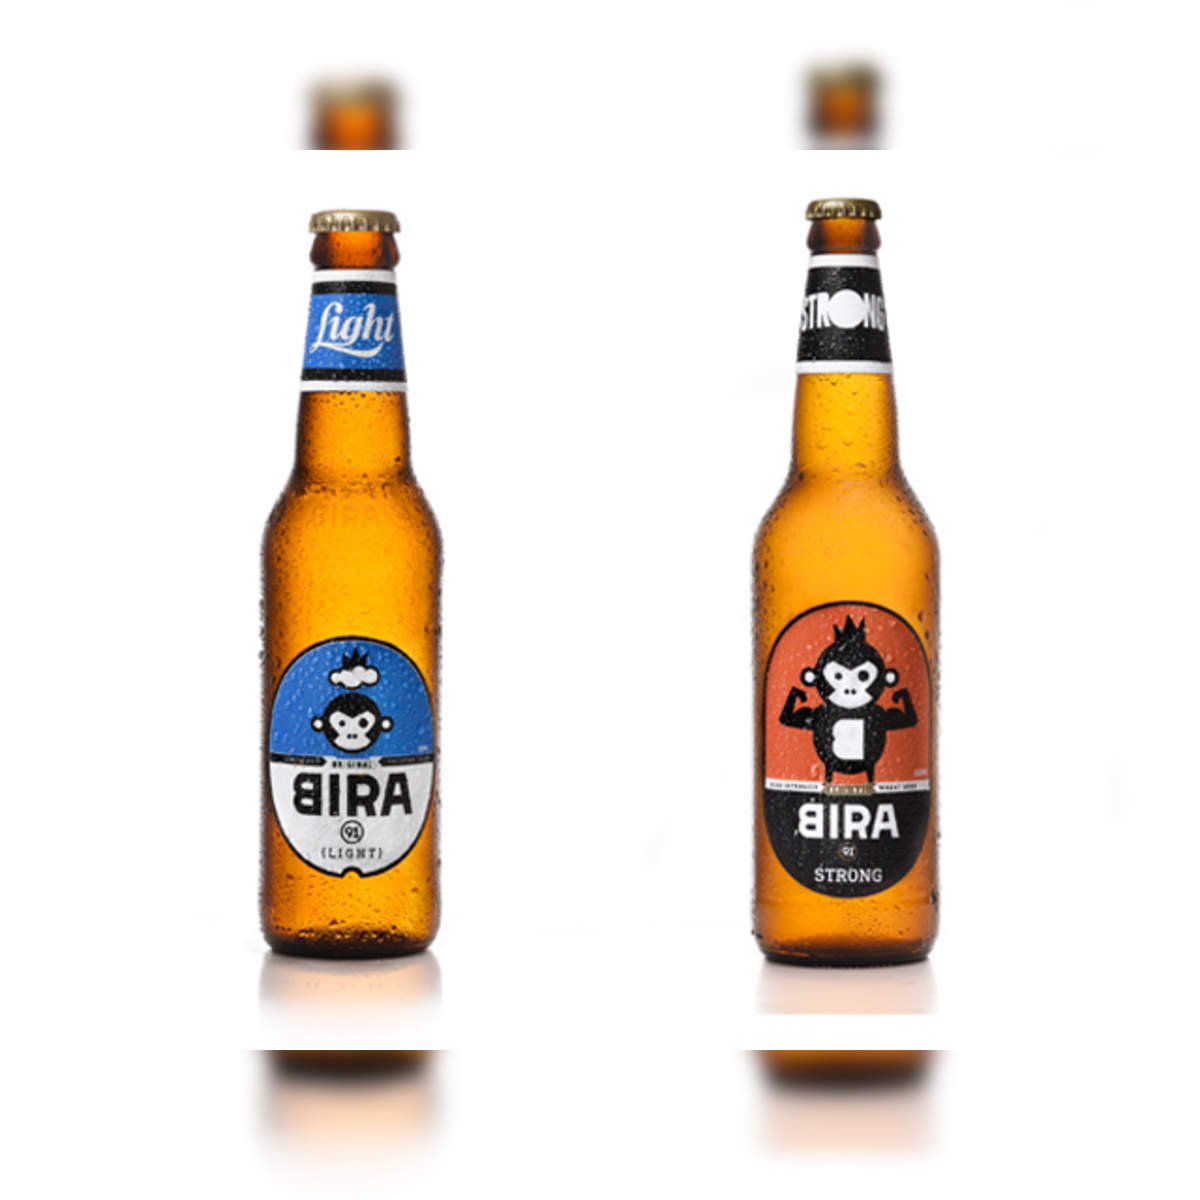 Bira 91 Launches 2 New Beers